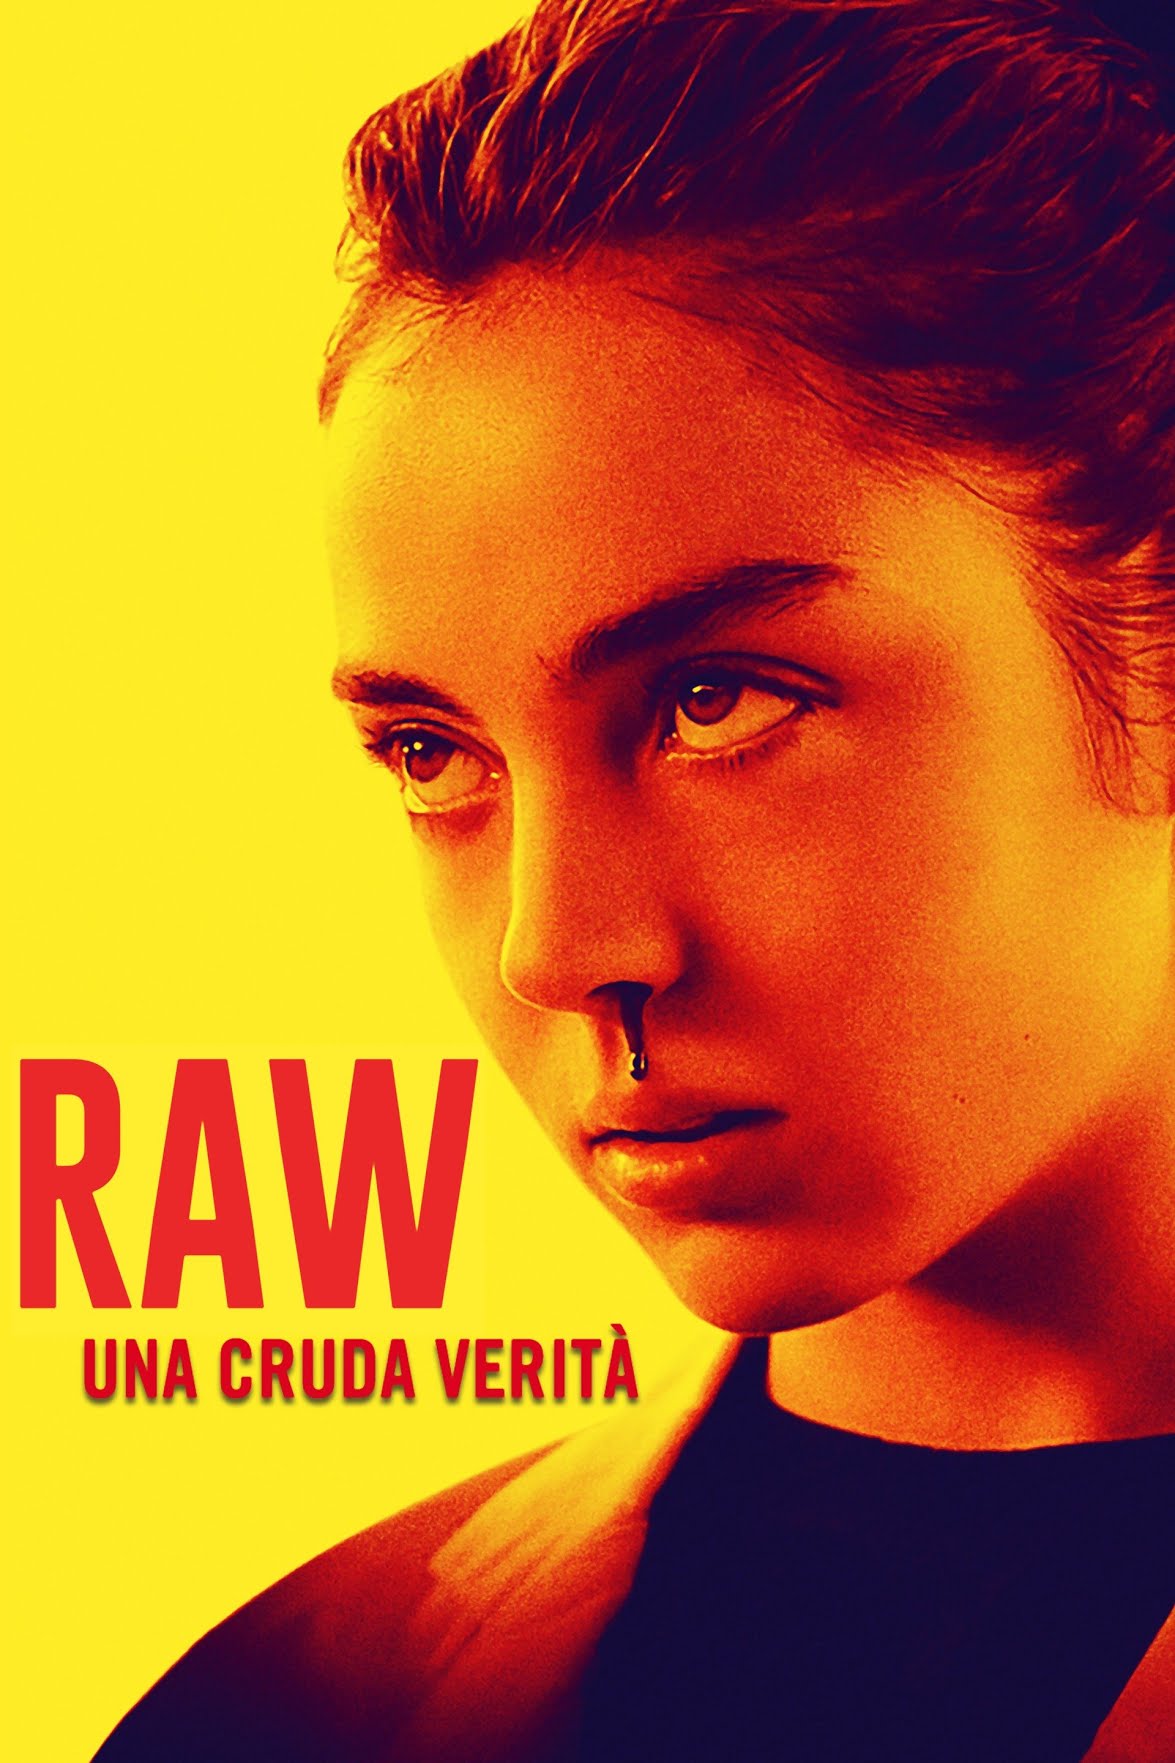 Raw – Una cruda verità [HD] (2016)